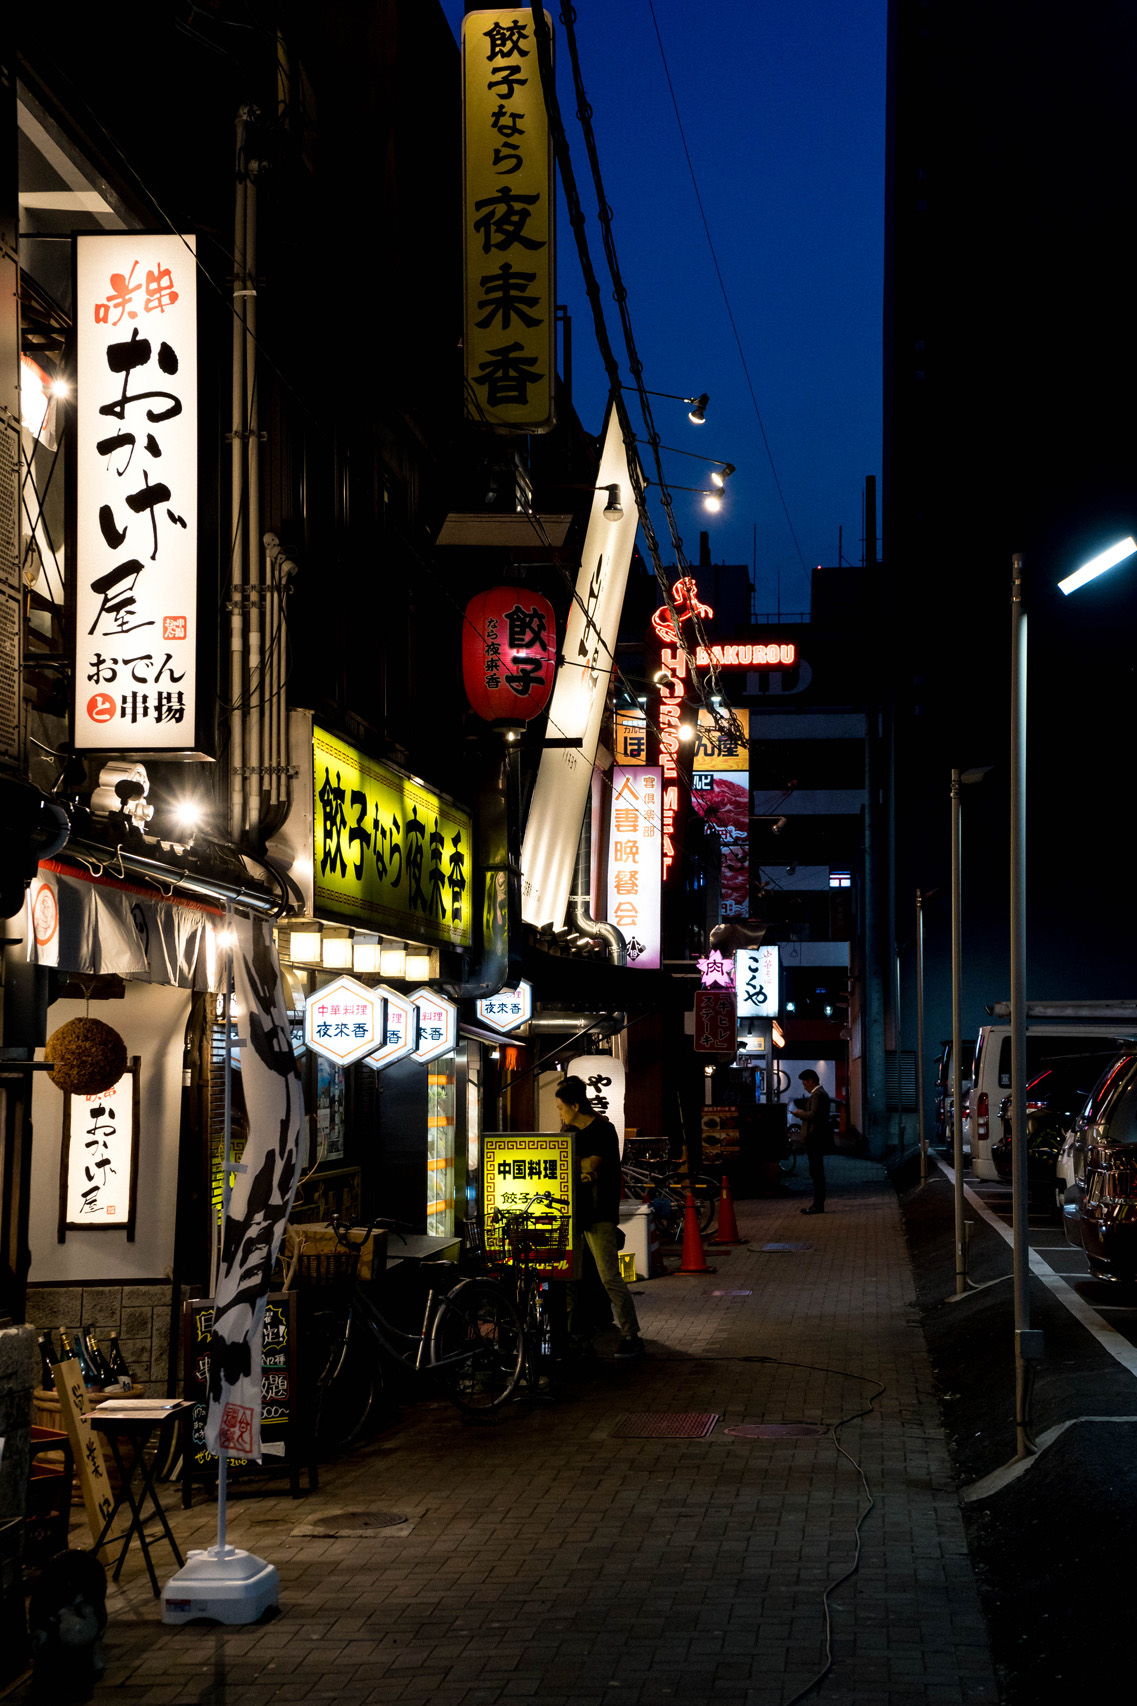 Streets of Nagoya by night